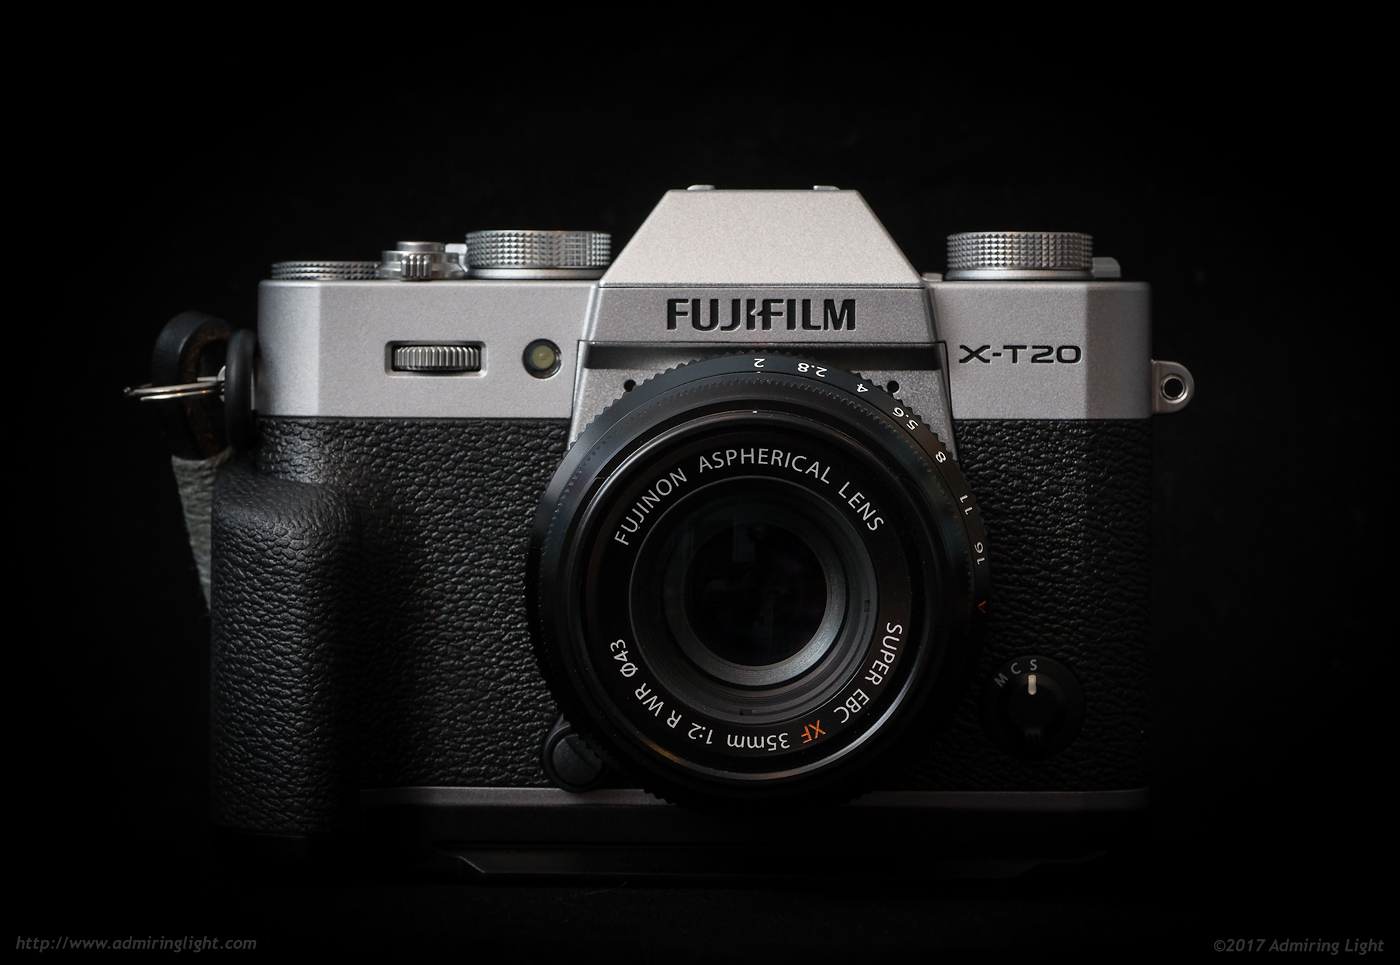 Fujifilm X-T20 with the MHG-XT10